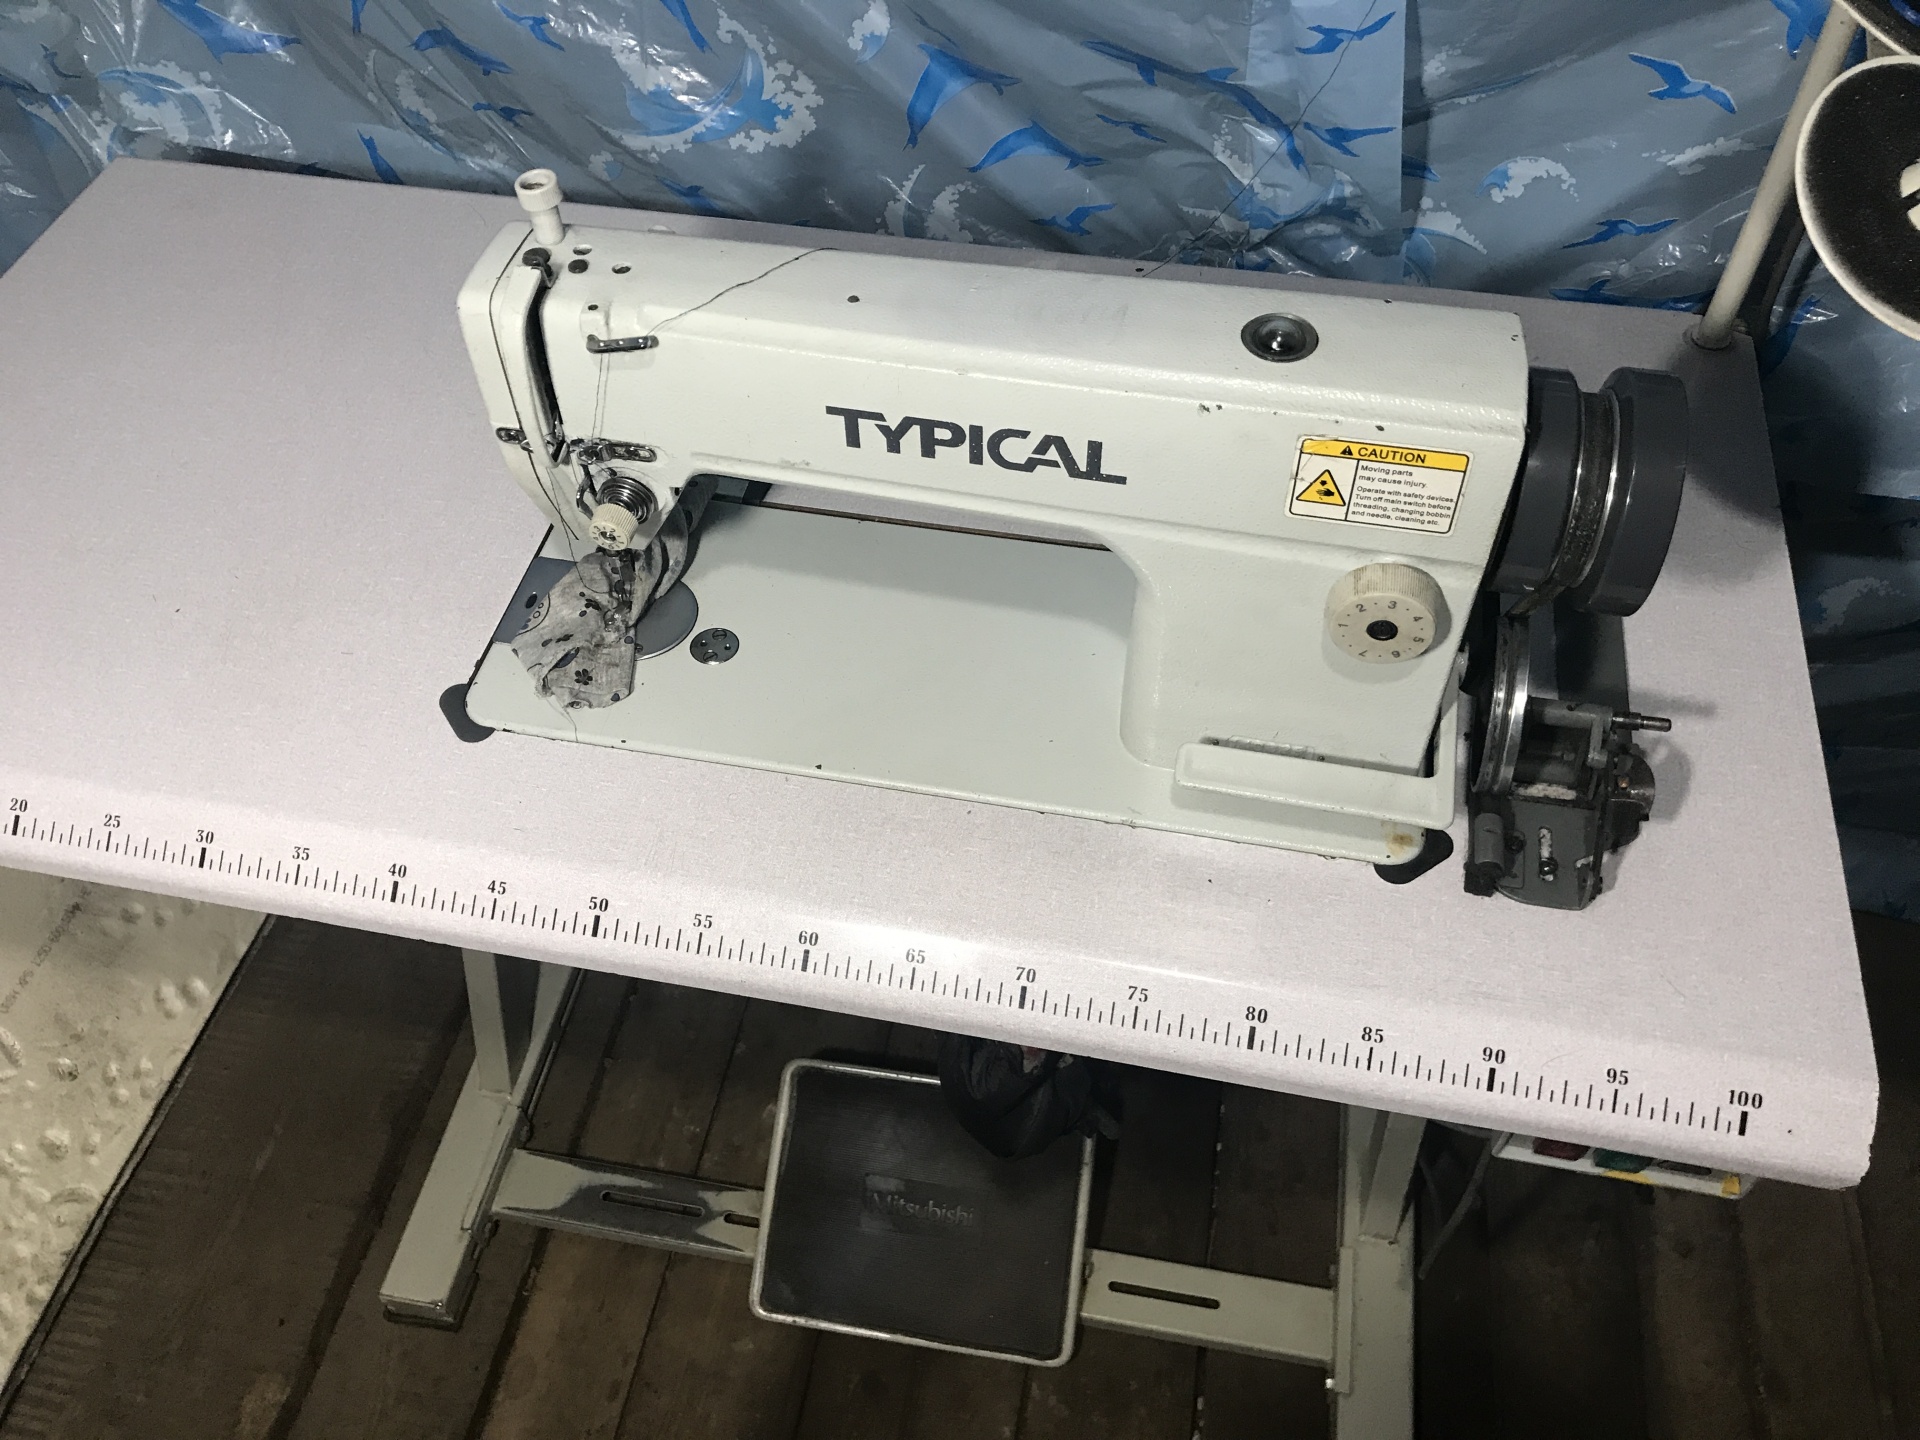 Typical швейная машина gc6150h